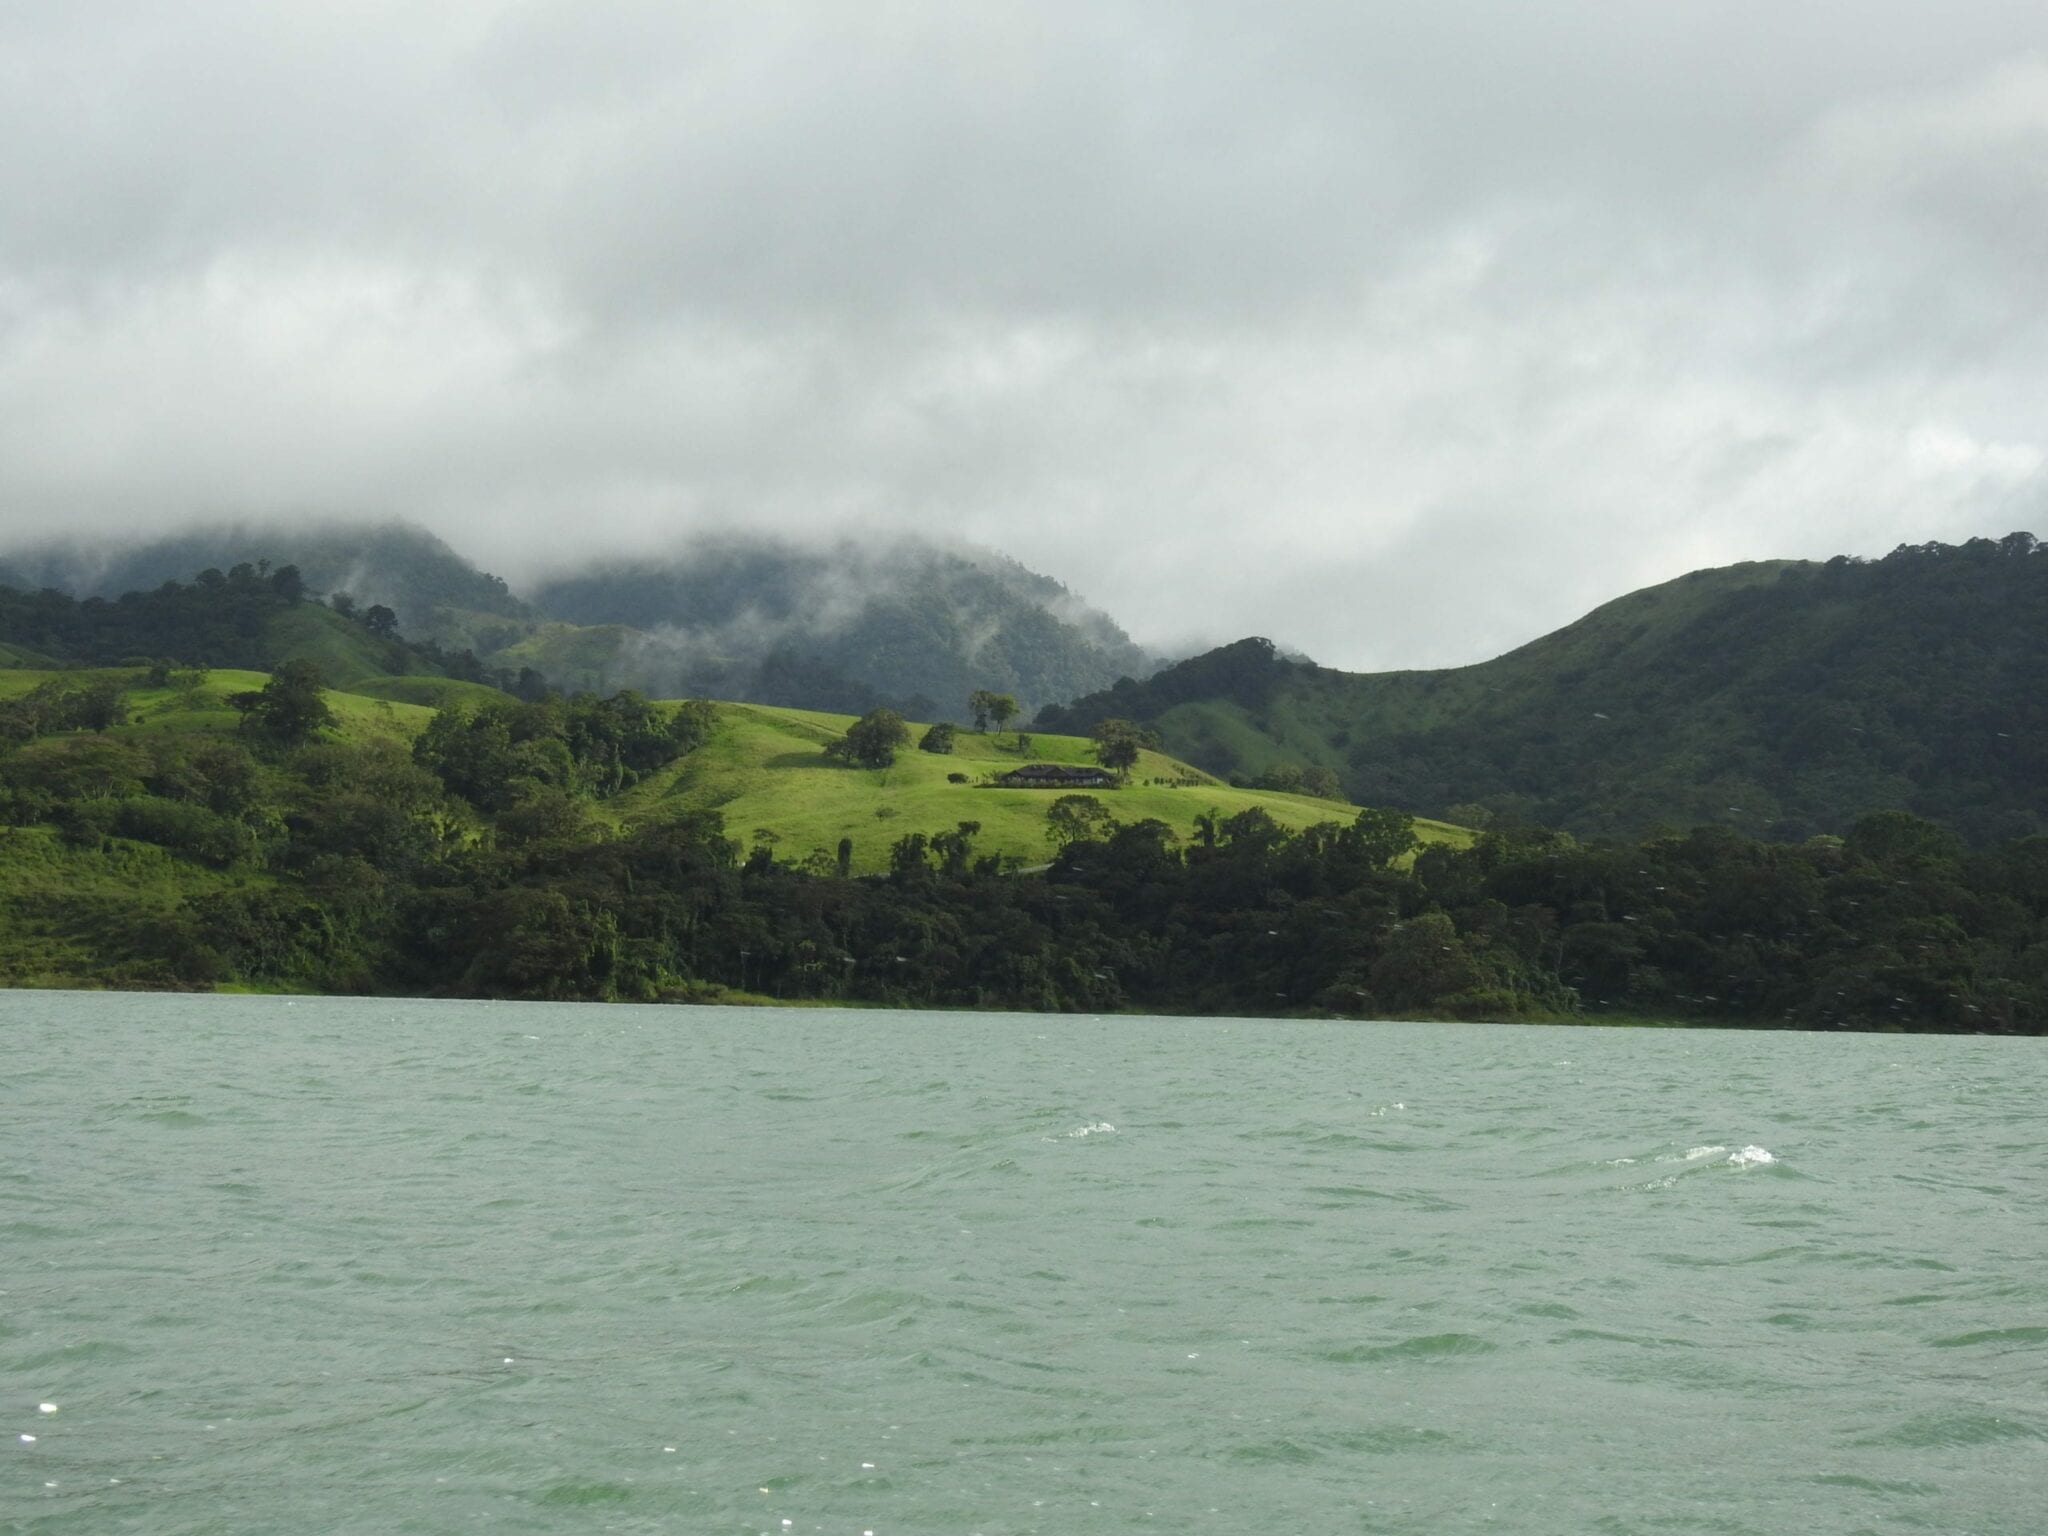 Costa Rica Nature